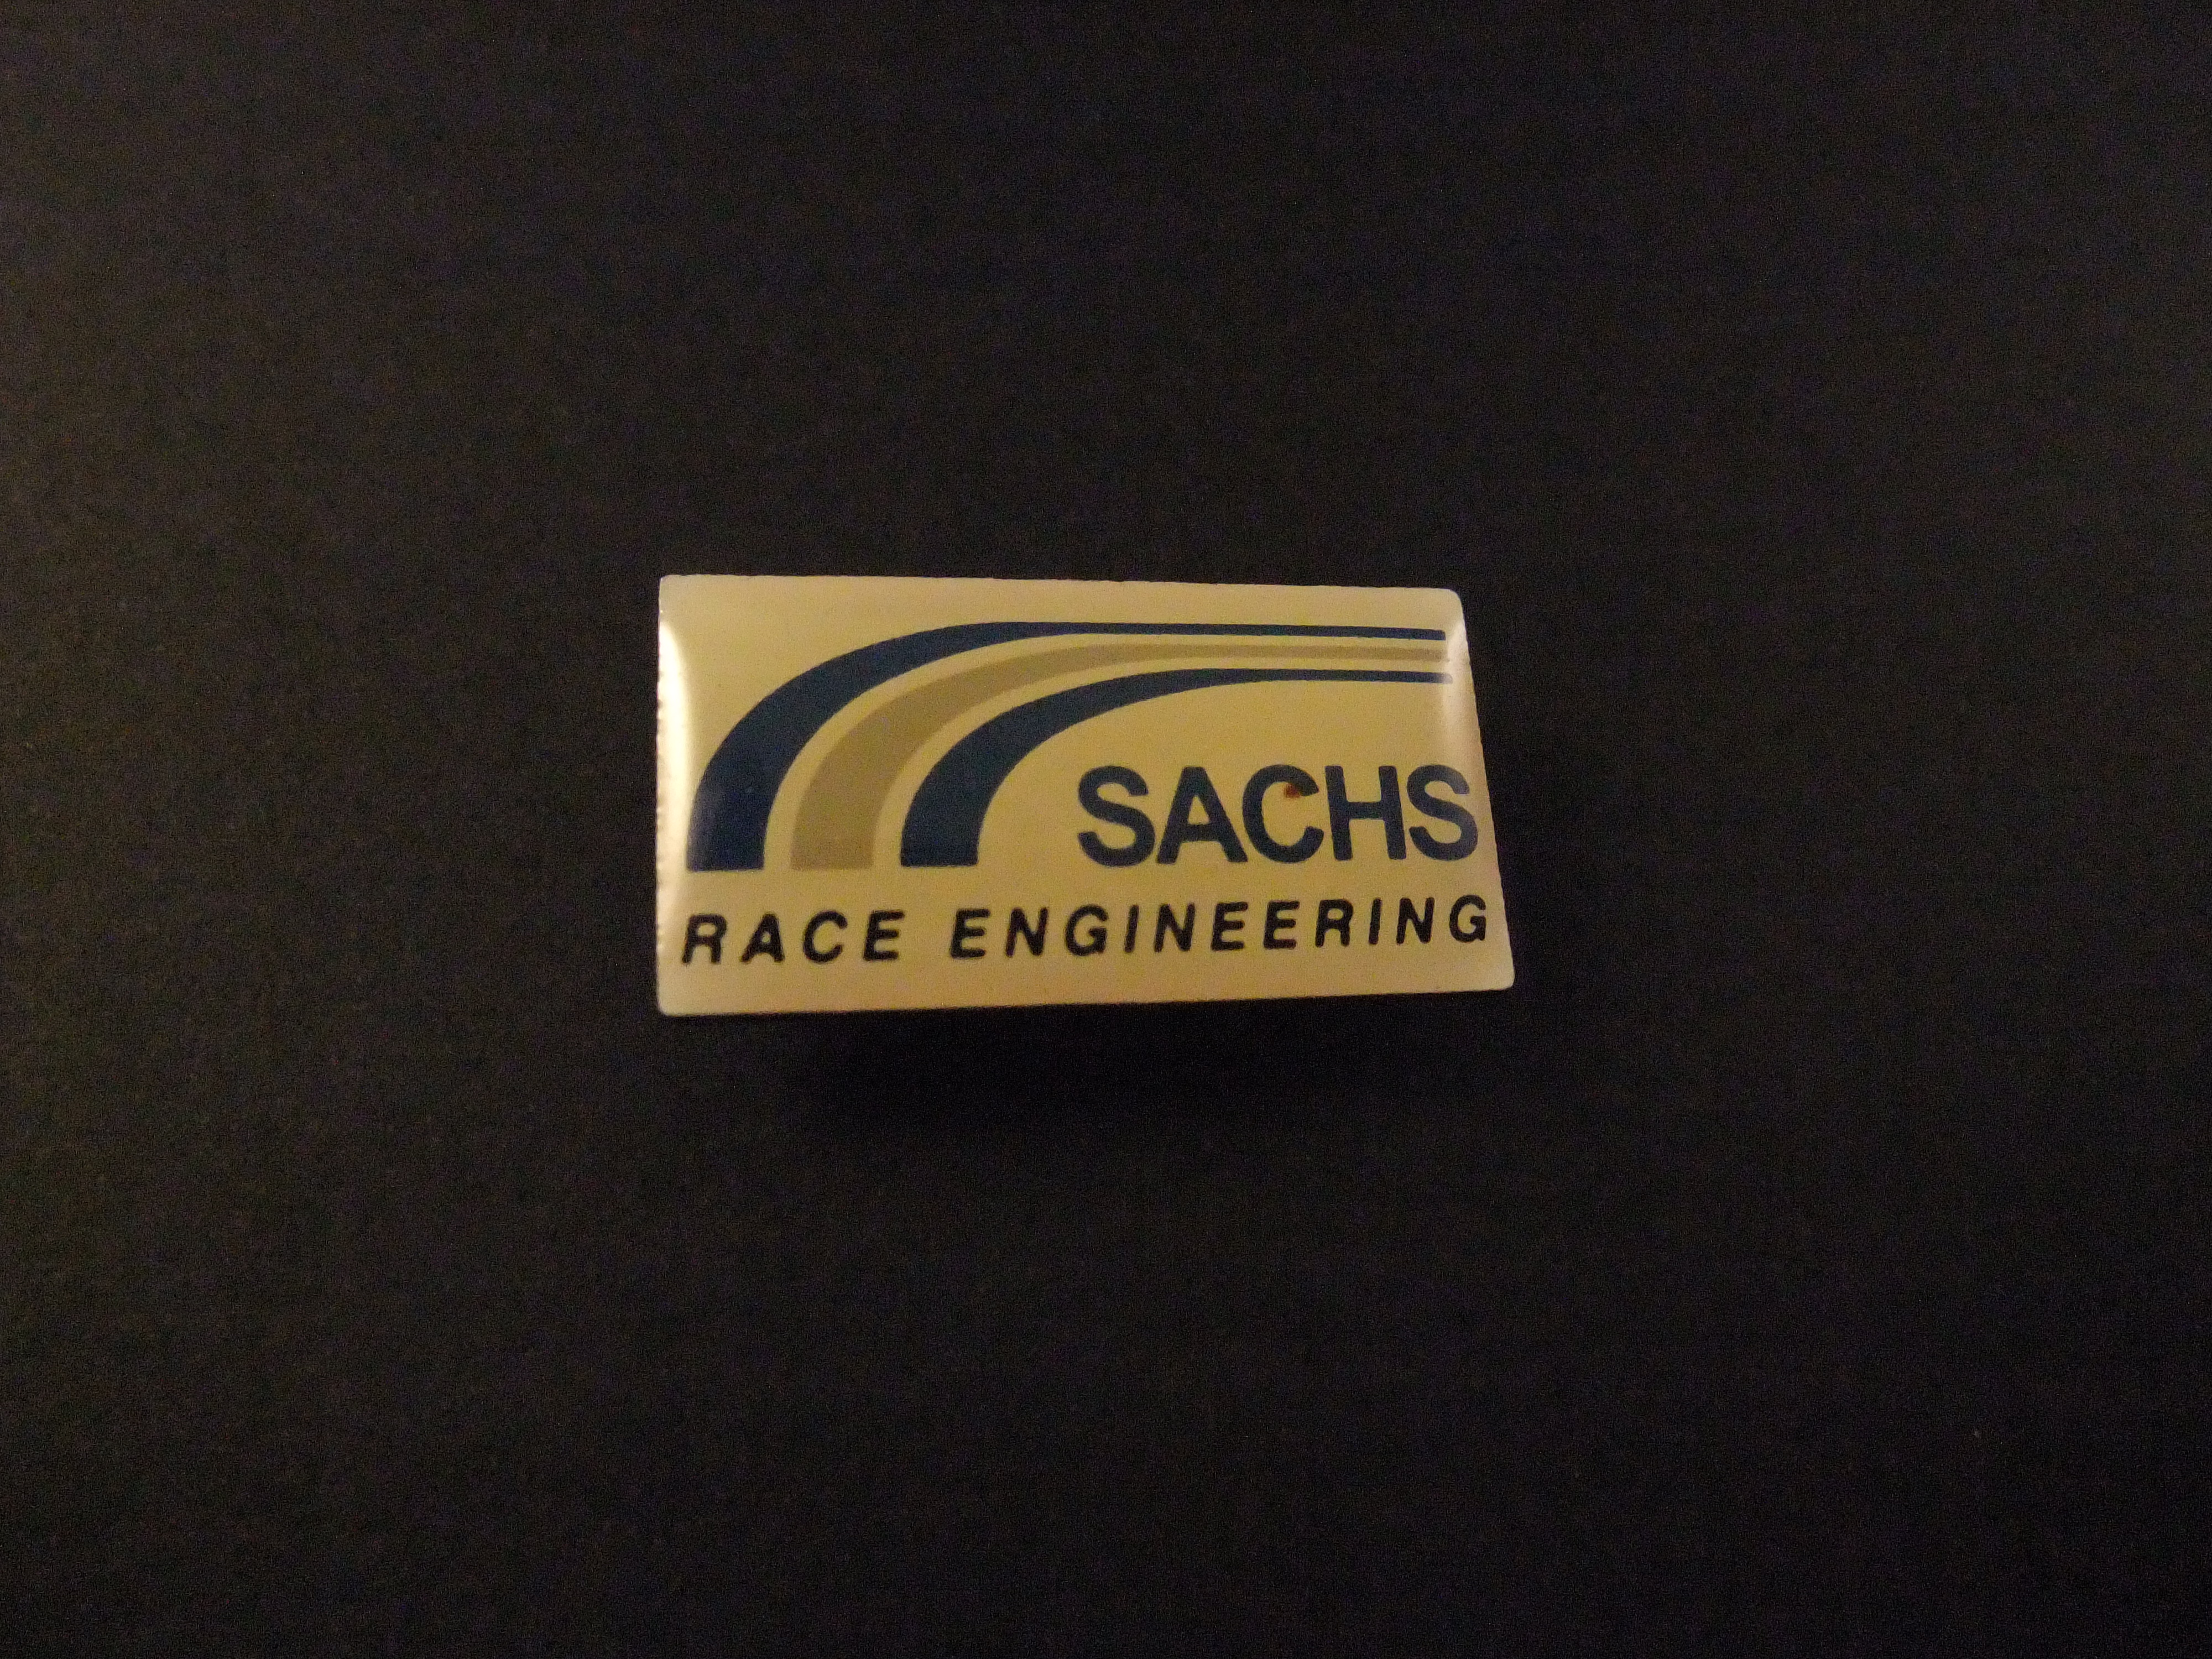 Sachs race engineering ( Duitse fabrikant van motorfietsen en inbouwmotoren ( voorheen  Fichtel & Sachs, Mannesmann Sachs) logo